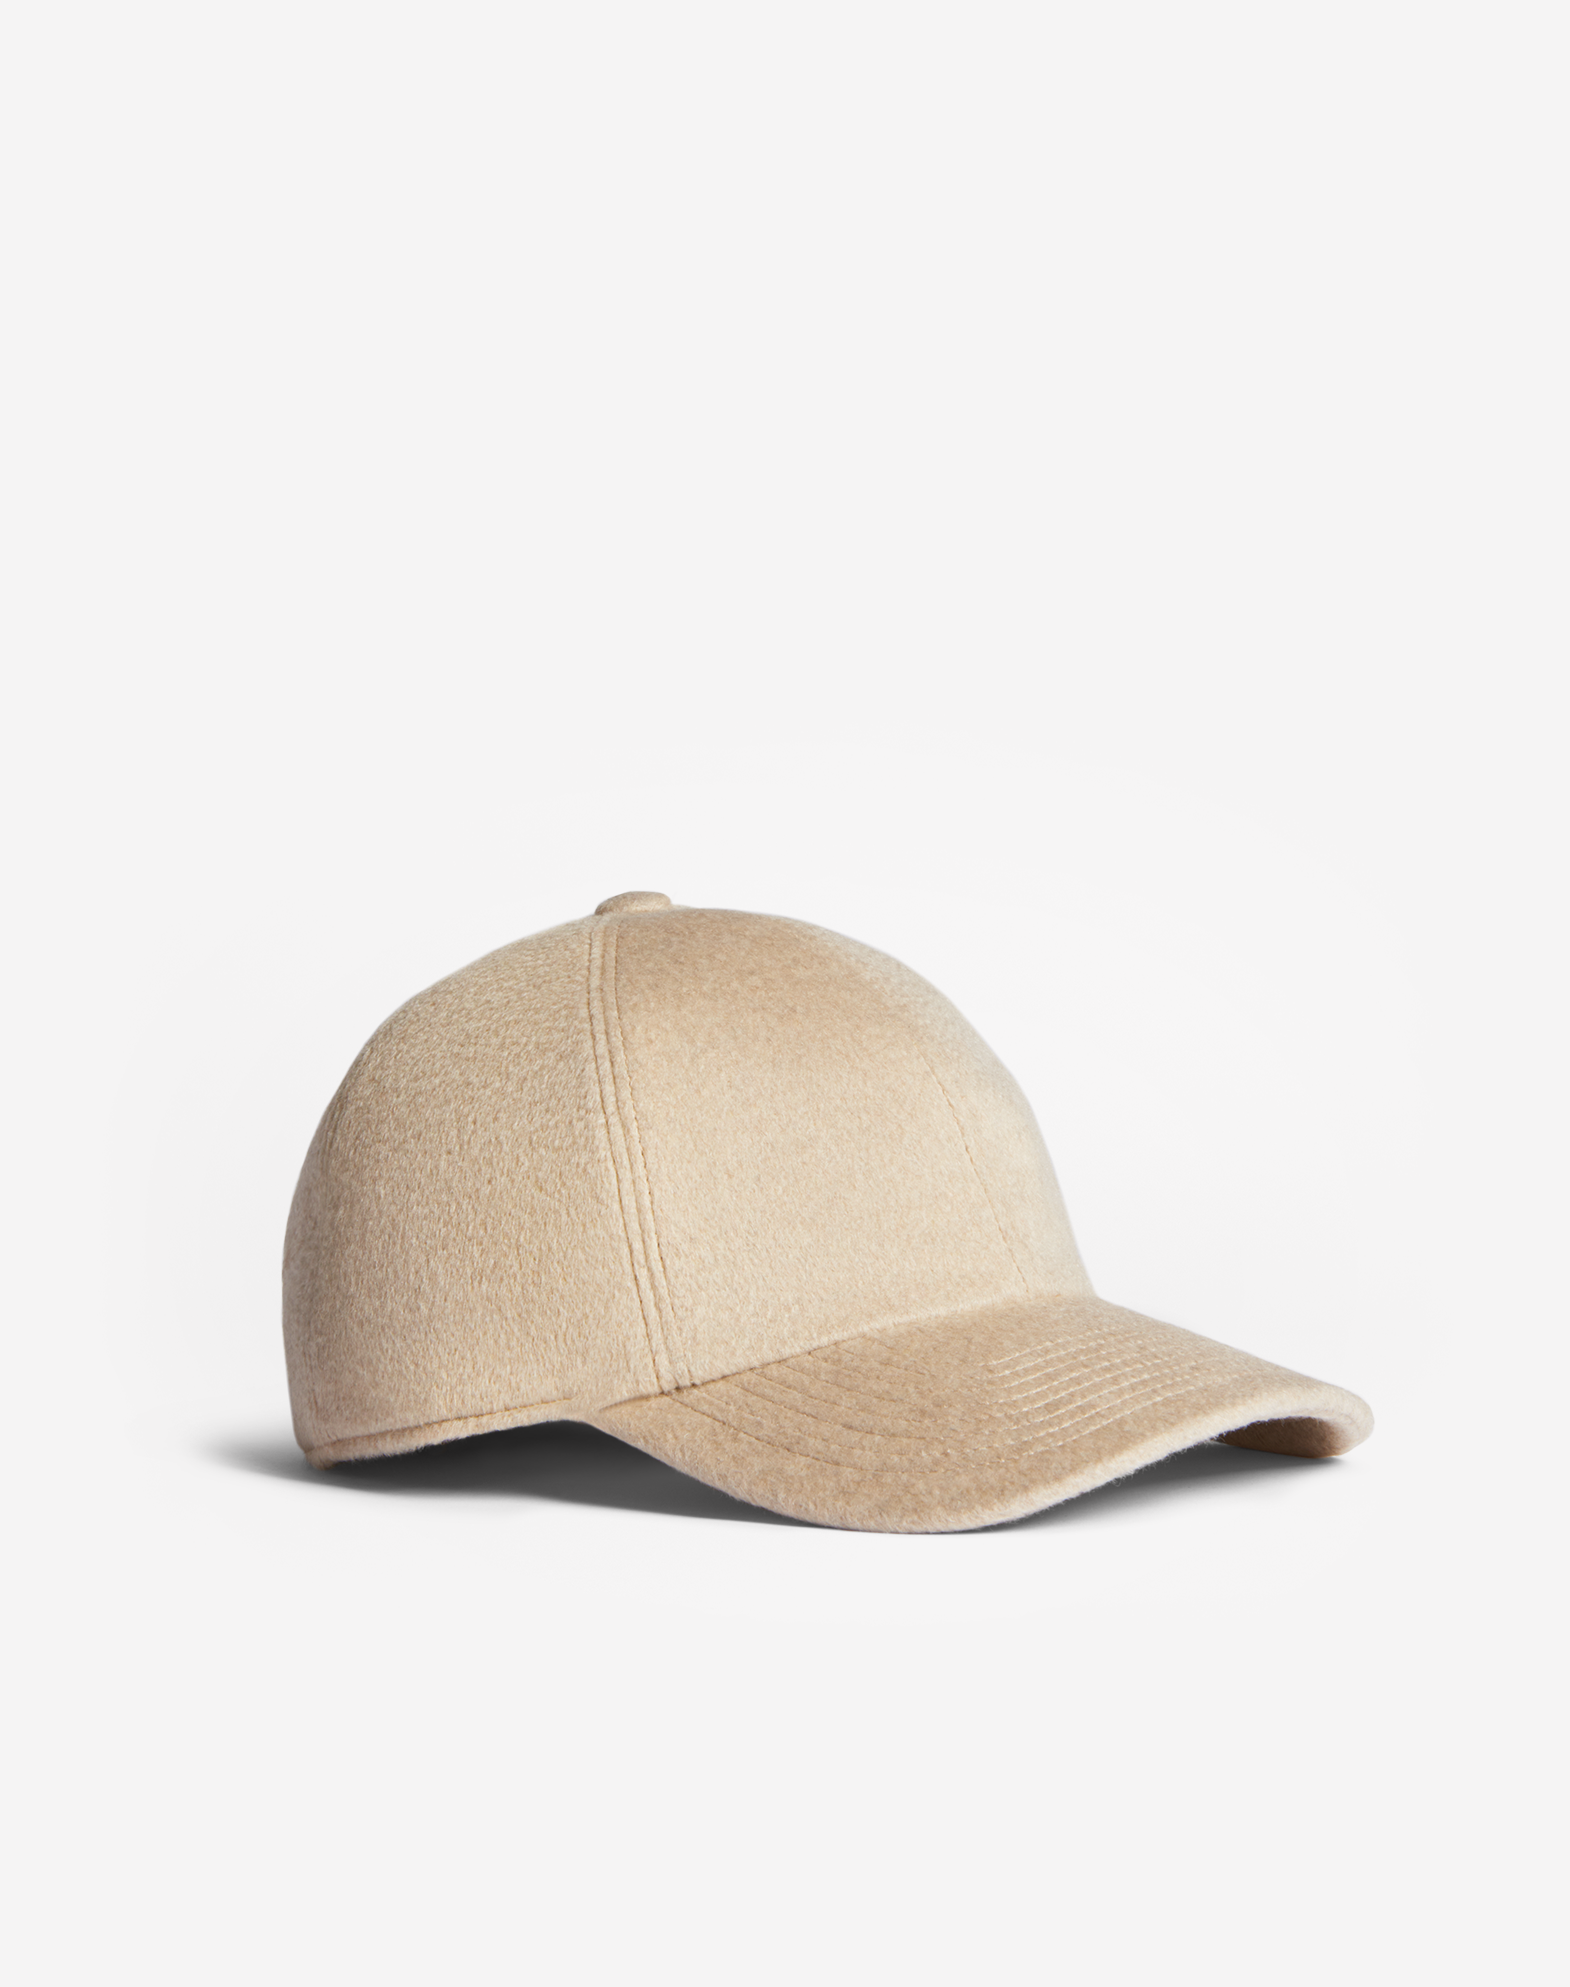 Dunhill Luxury Men's Hats